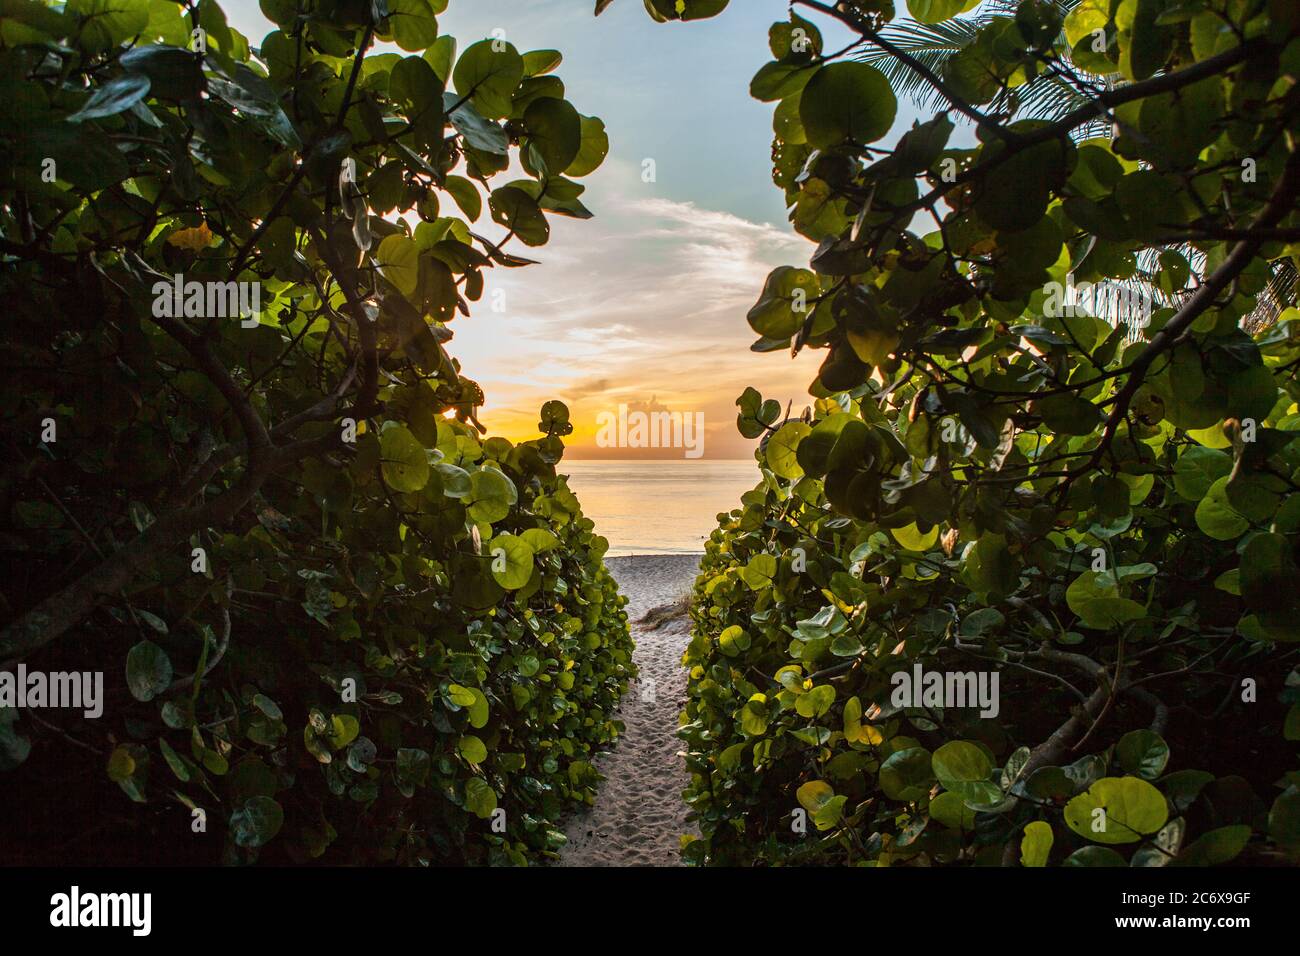 Looking down a narrow passageway through thick sea grapes towards the Atlantic Ocean at sunrise Stock Photo